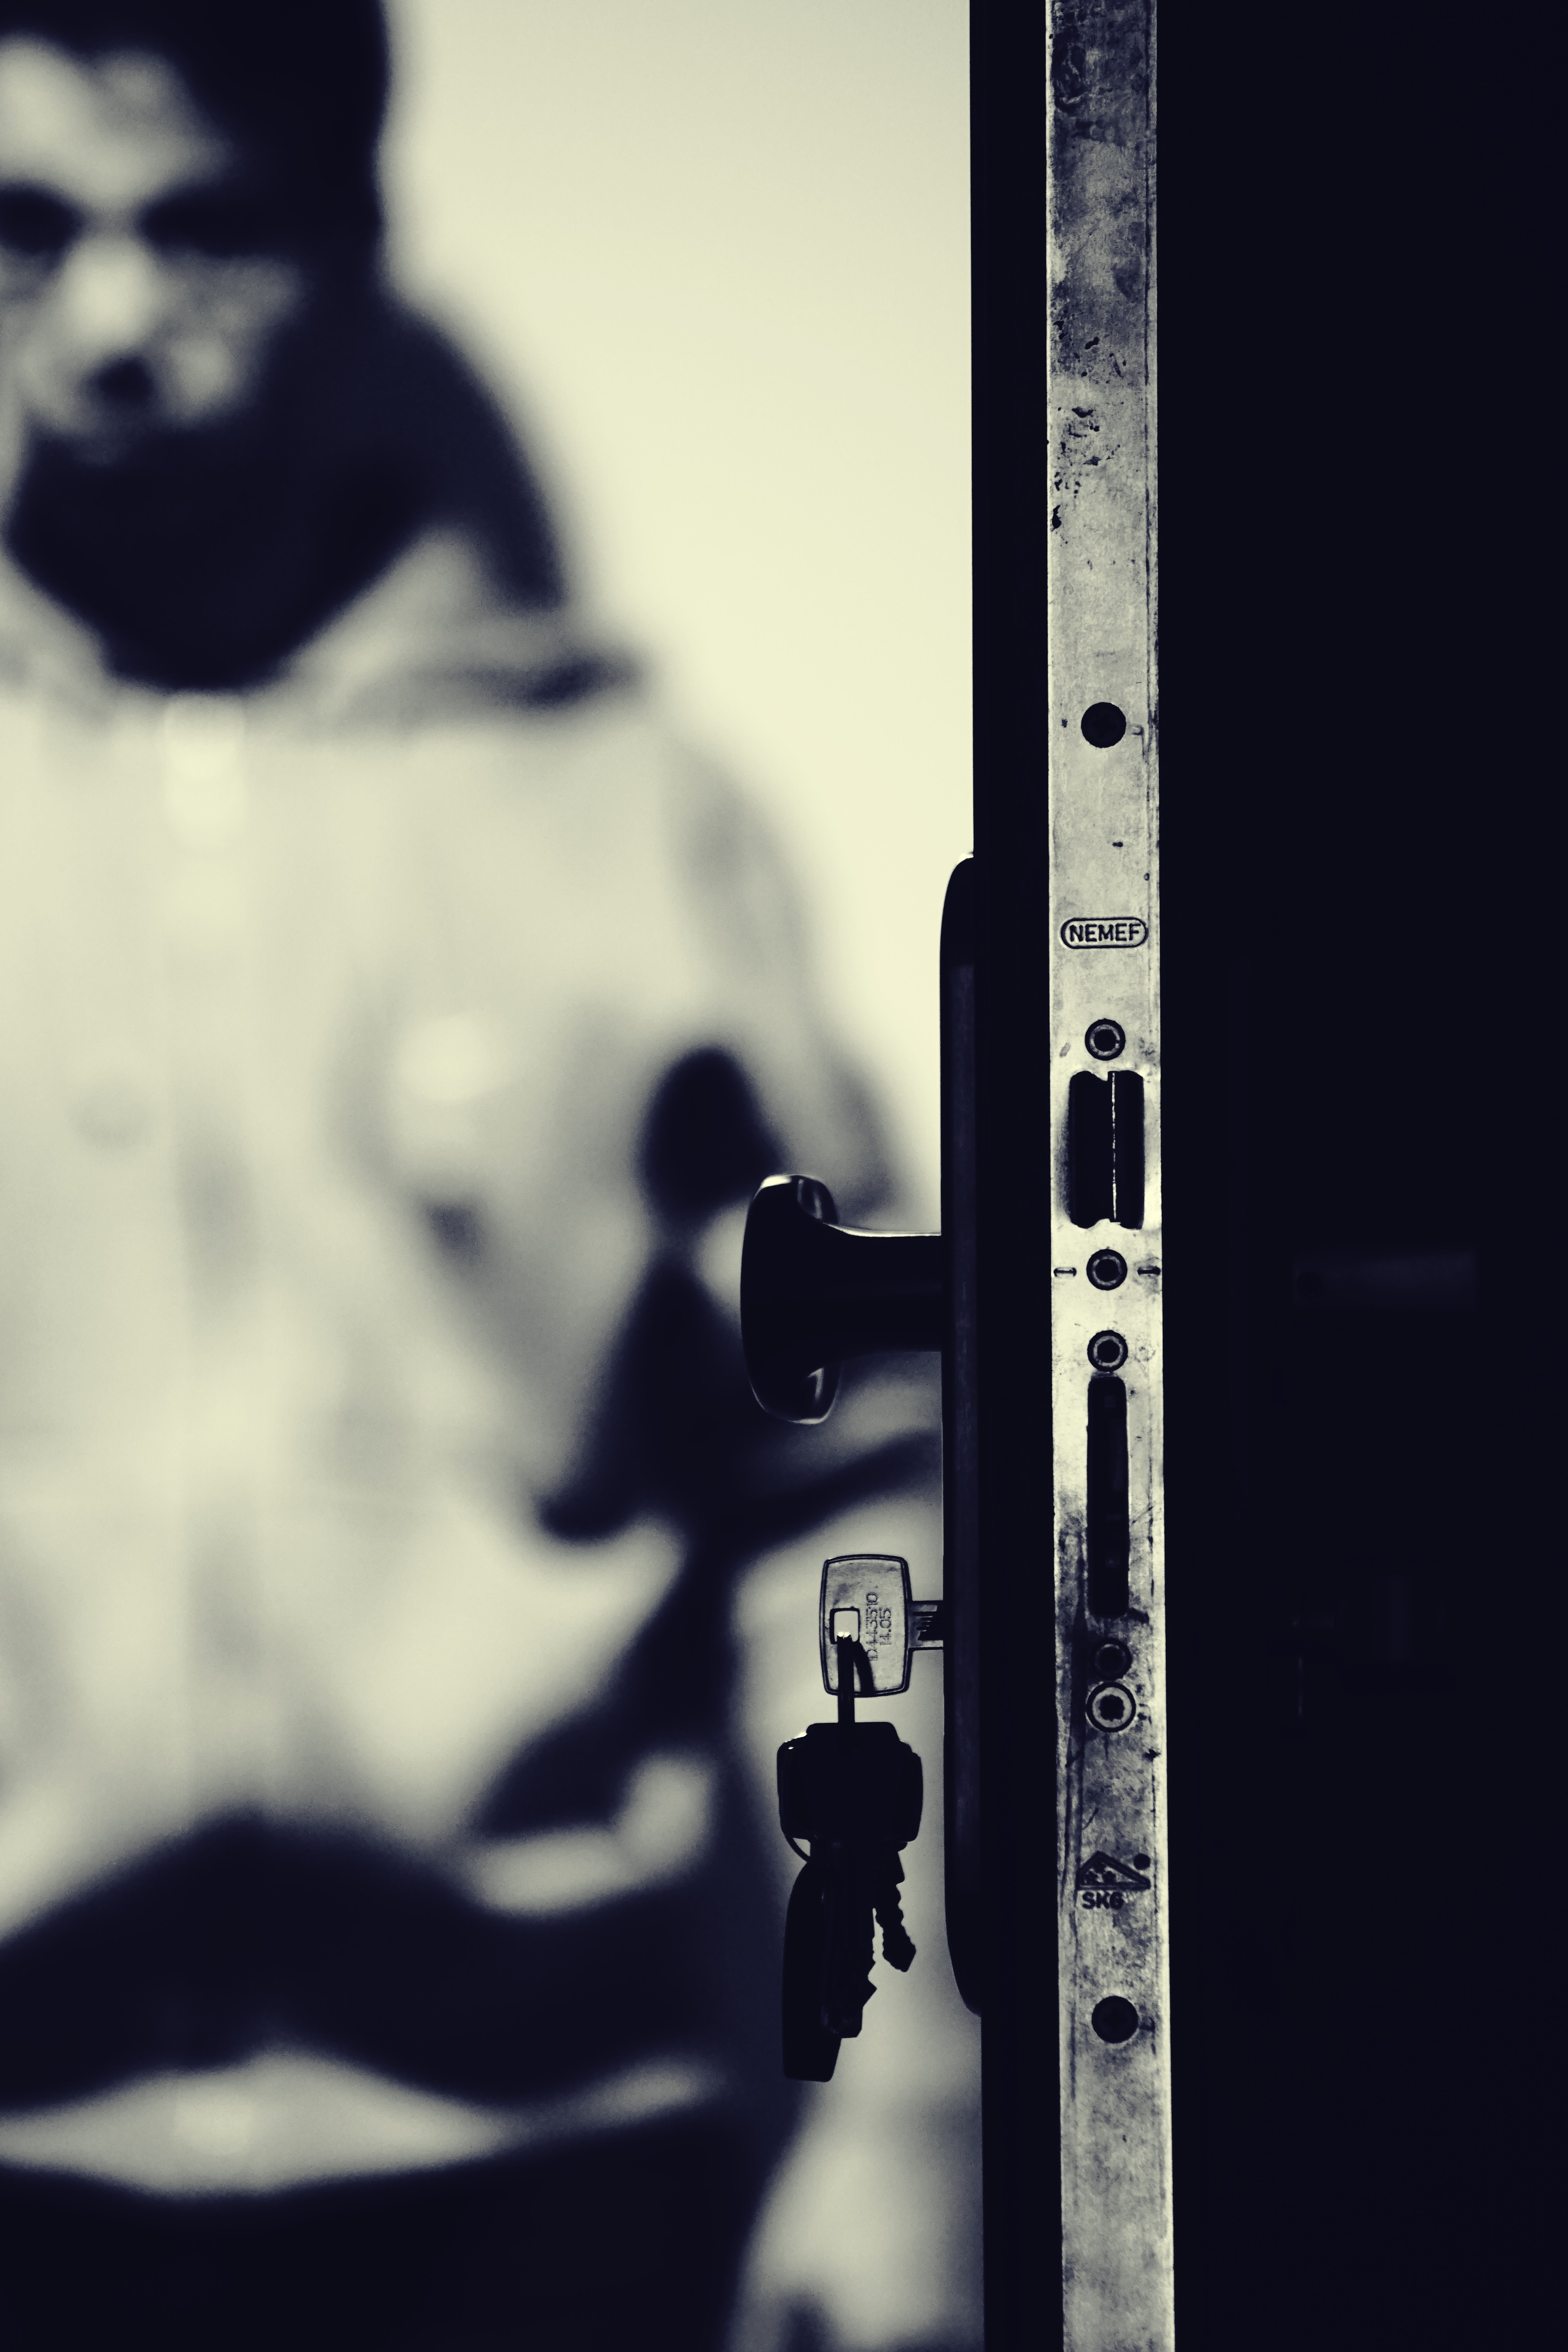 Monochrome photo of keys and door knob